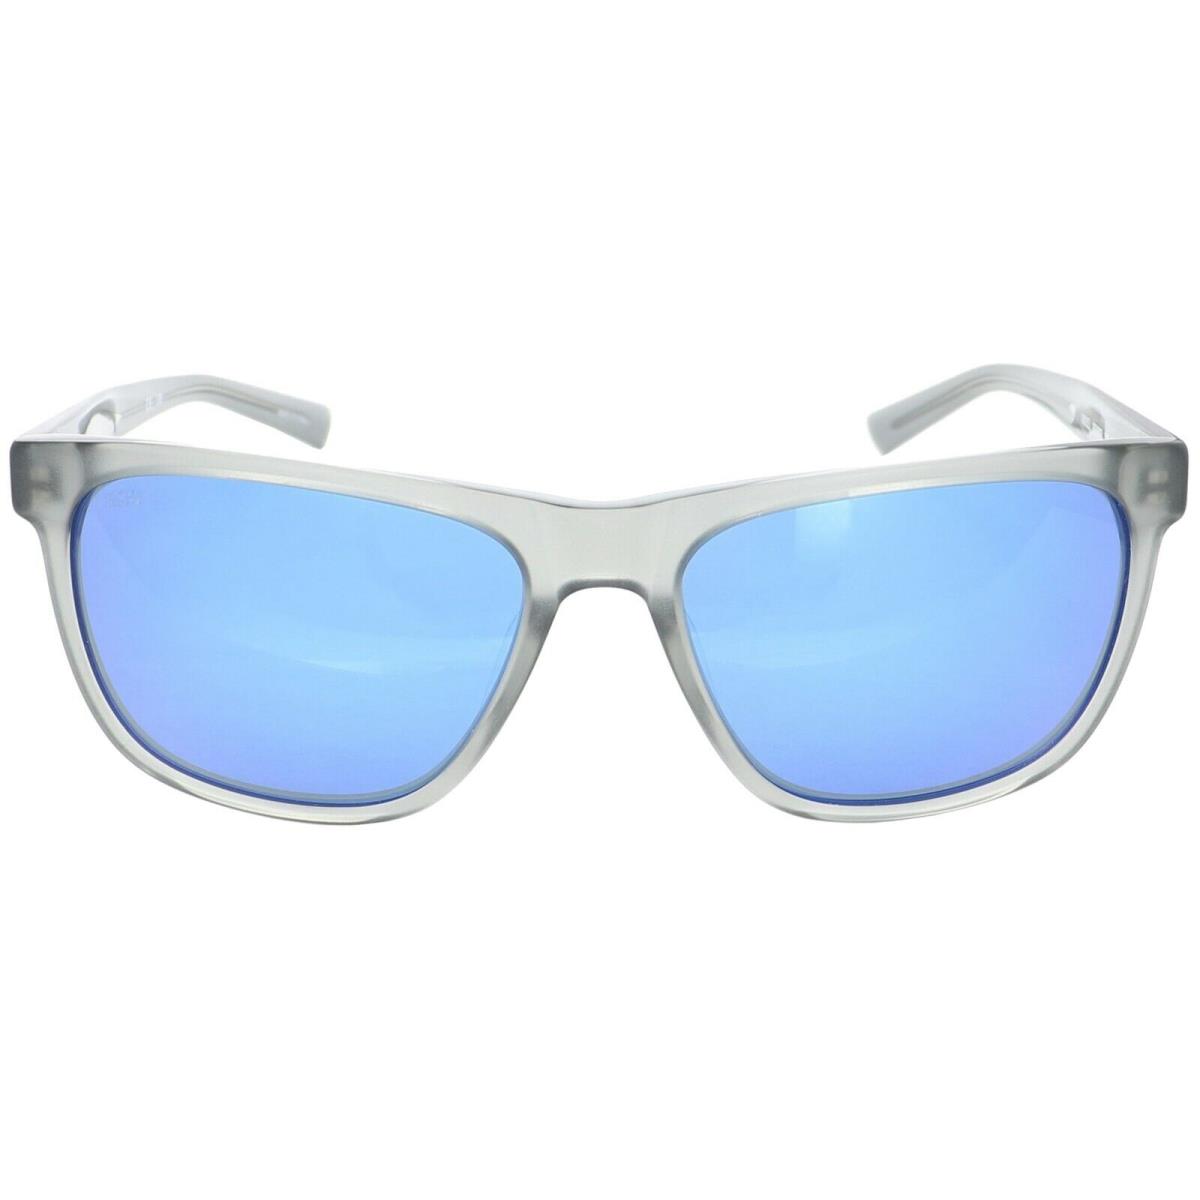 Costa Del Mar Apalach Unisex Polarized Matte Gray Sunglasses Apa 230 Obmglp - Matte Gray Crystal Frame, Blue Mirror Lens